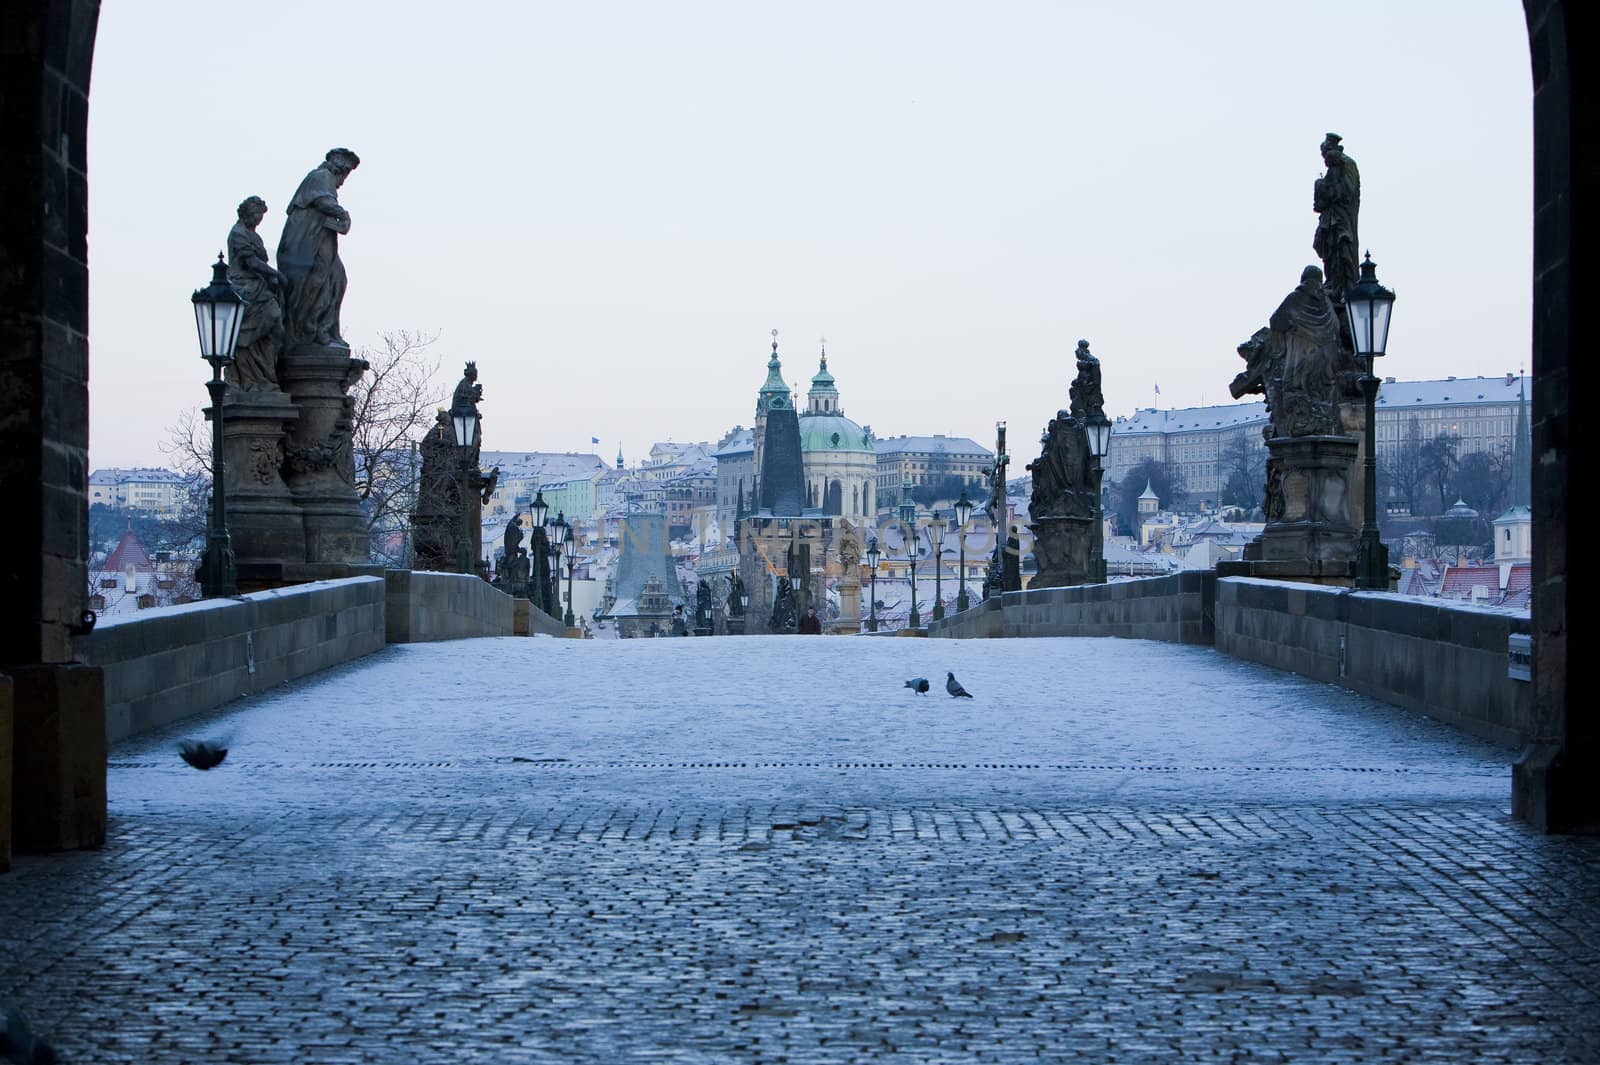 Charles Bridge in winter, Prague, Czech Republic by phbcz